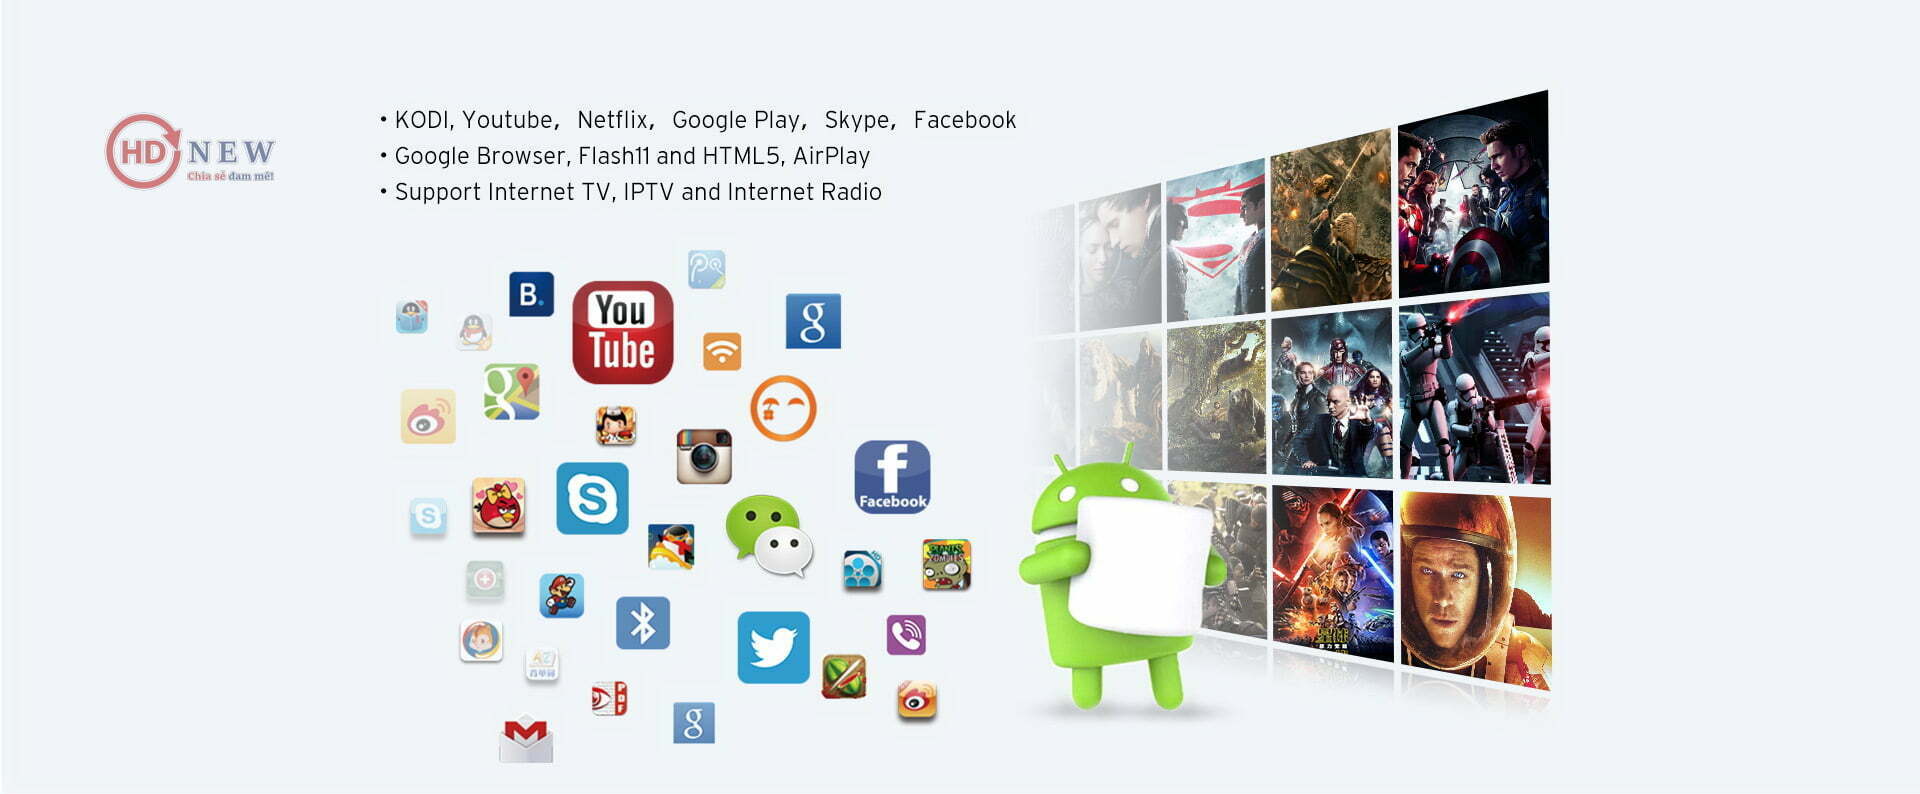 Android TV Box HiMedia H1 - HDnew Hà Nội